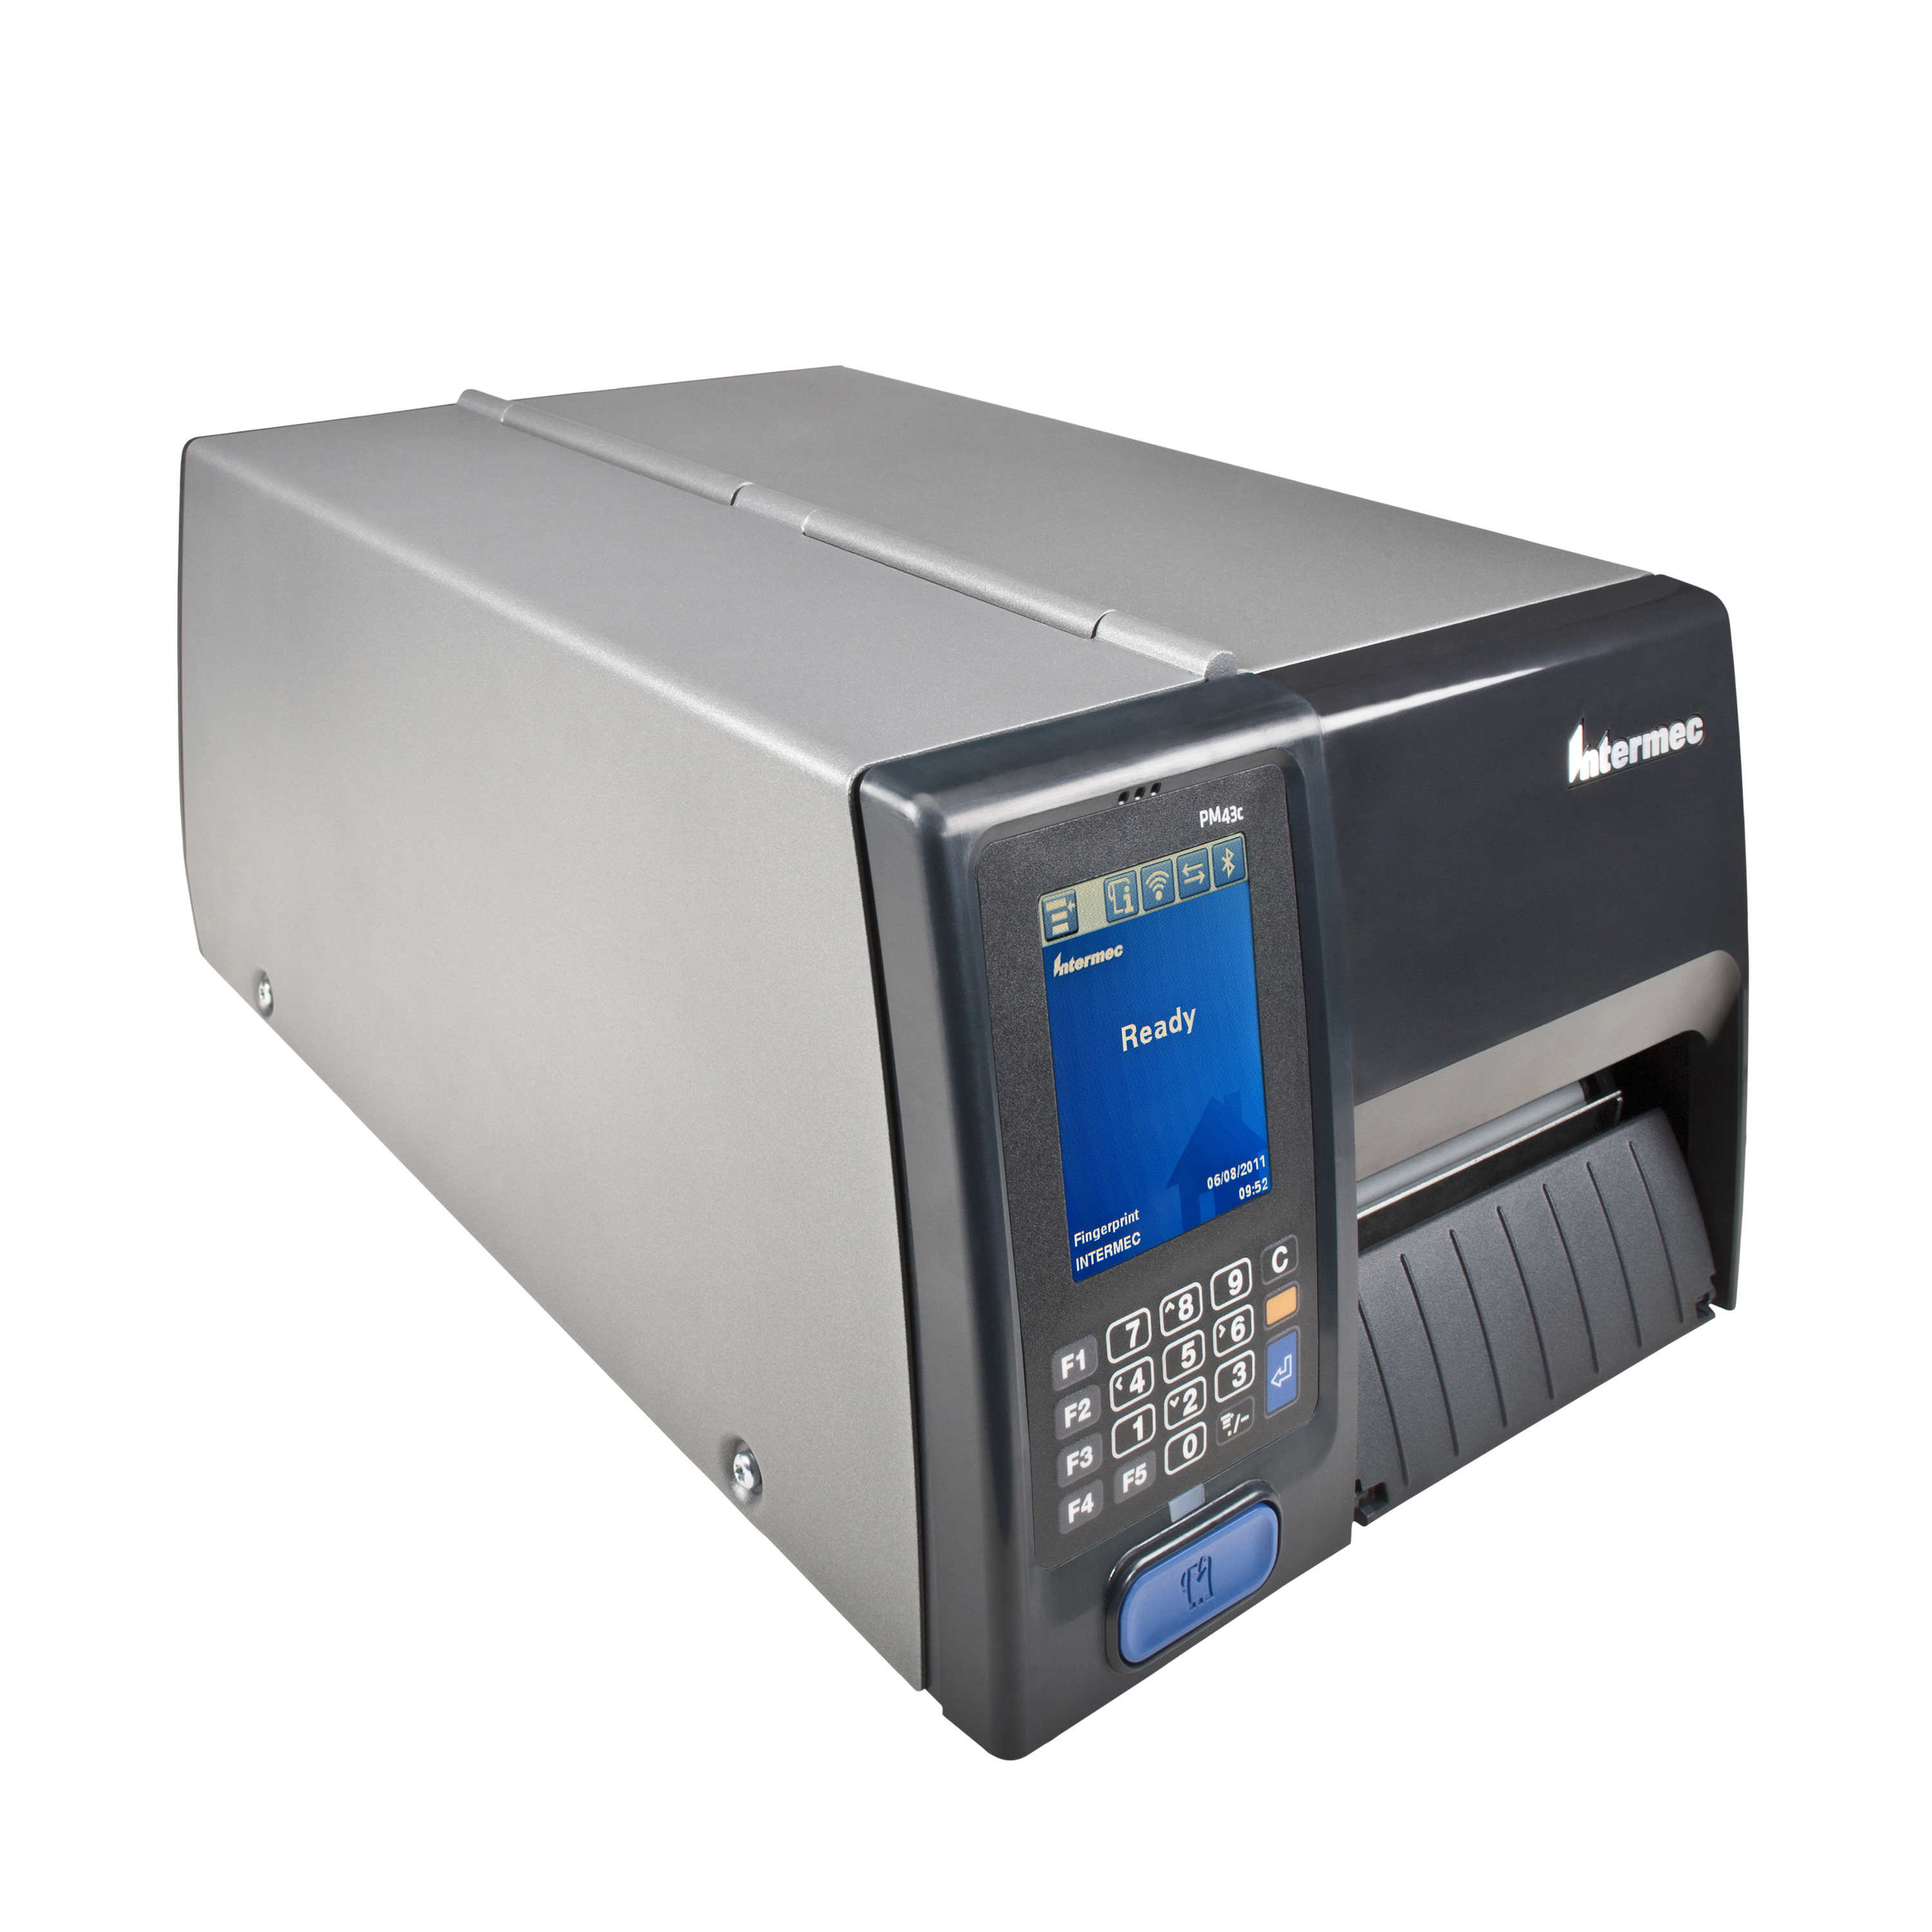 Intermec PM43/PM43c Mid-Range Printer